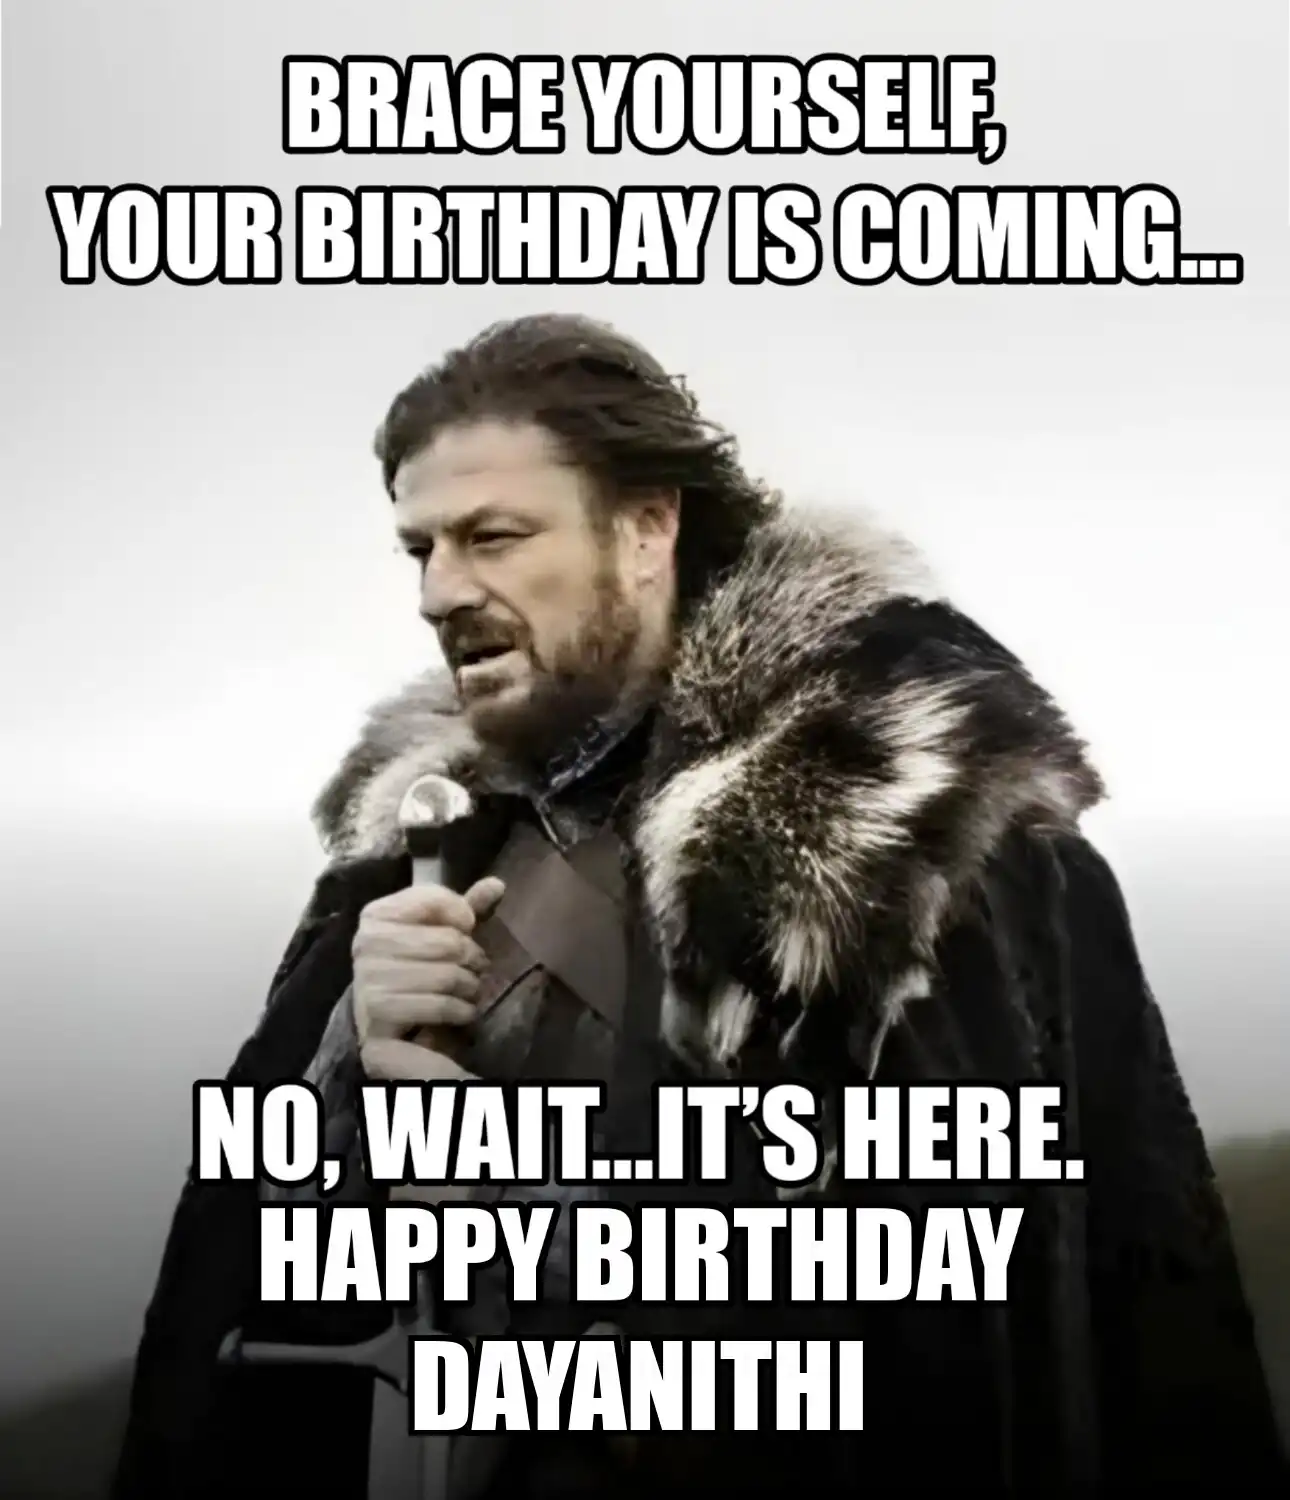 Happy Birthday Dayanithi Brace Yourself Your Birthday Is Coming Meme